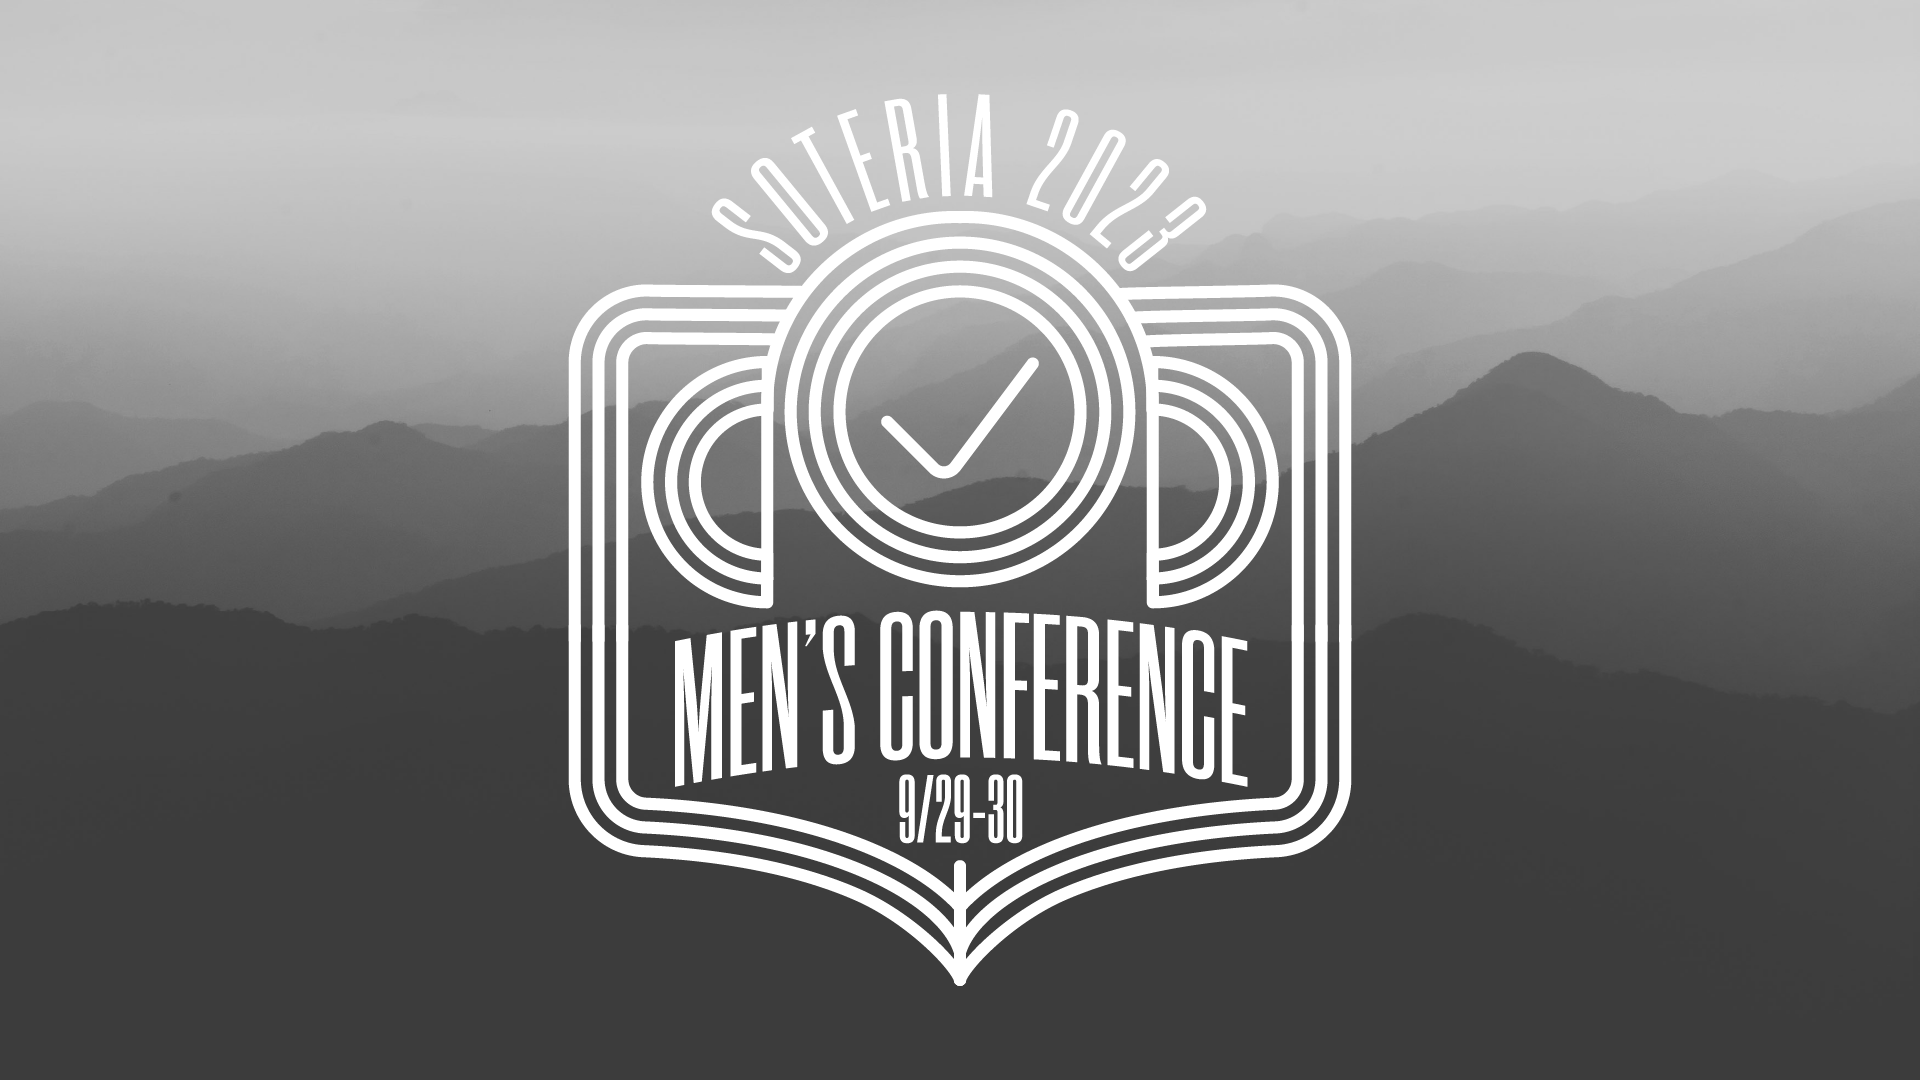 Soteria Men’s Conference